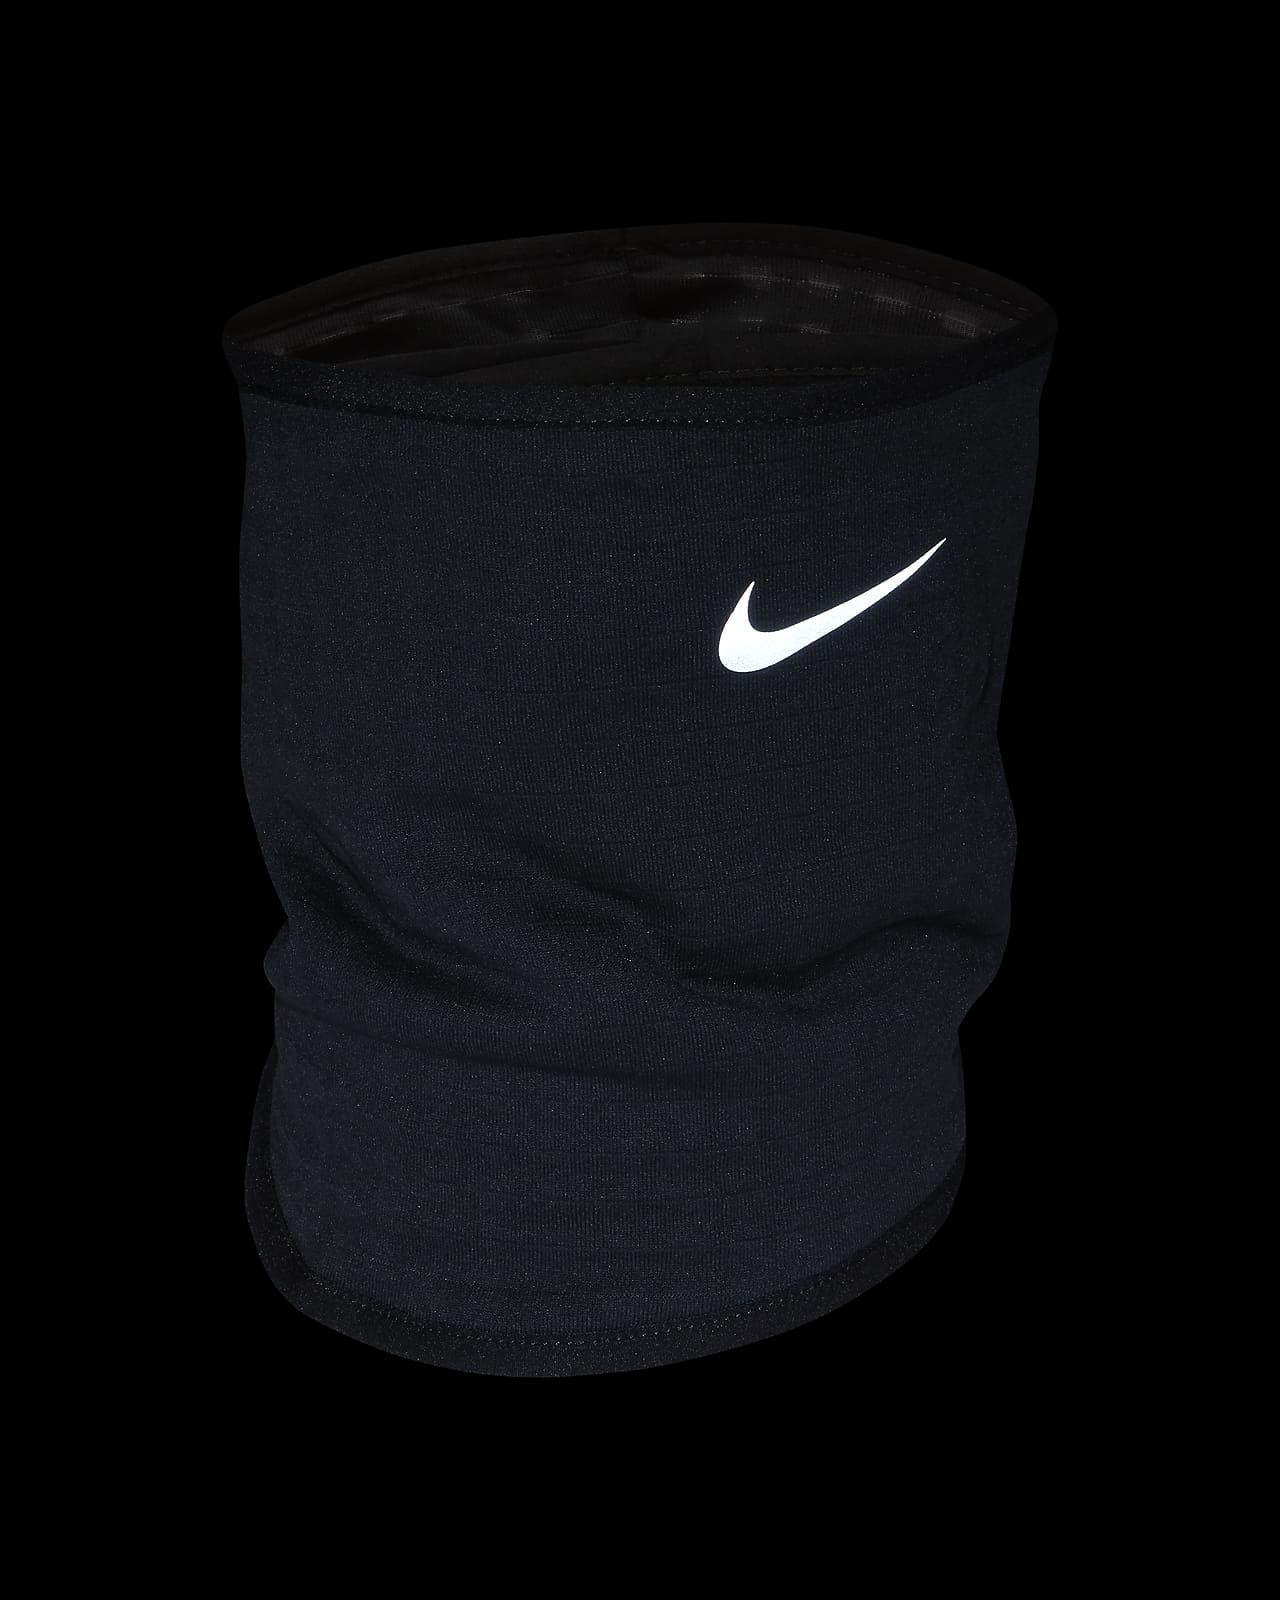 Calentador de cuello 3.0 Nike Therma Nike.com